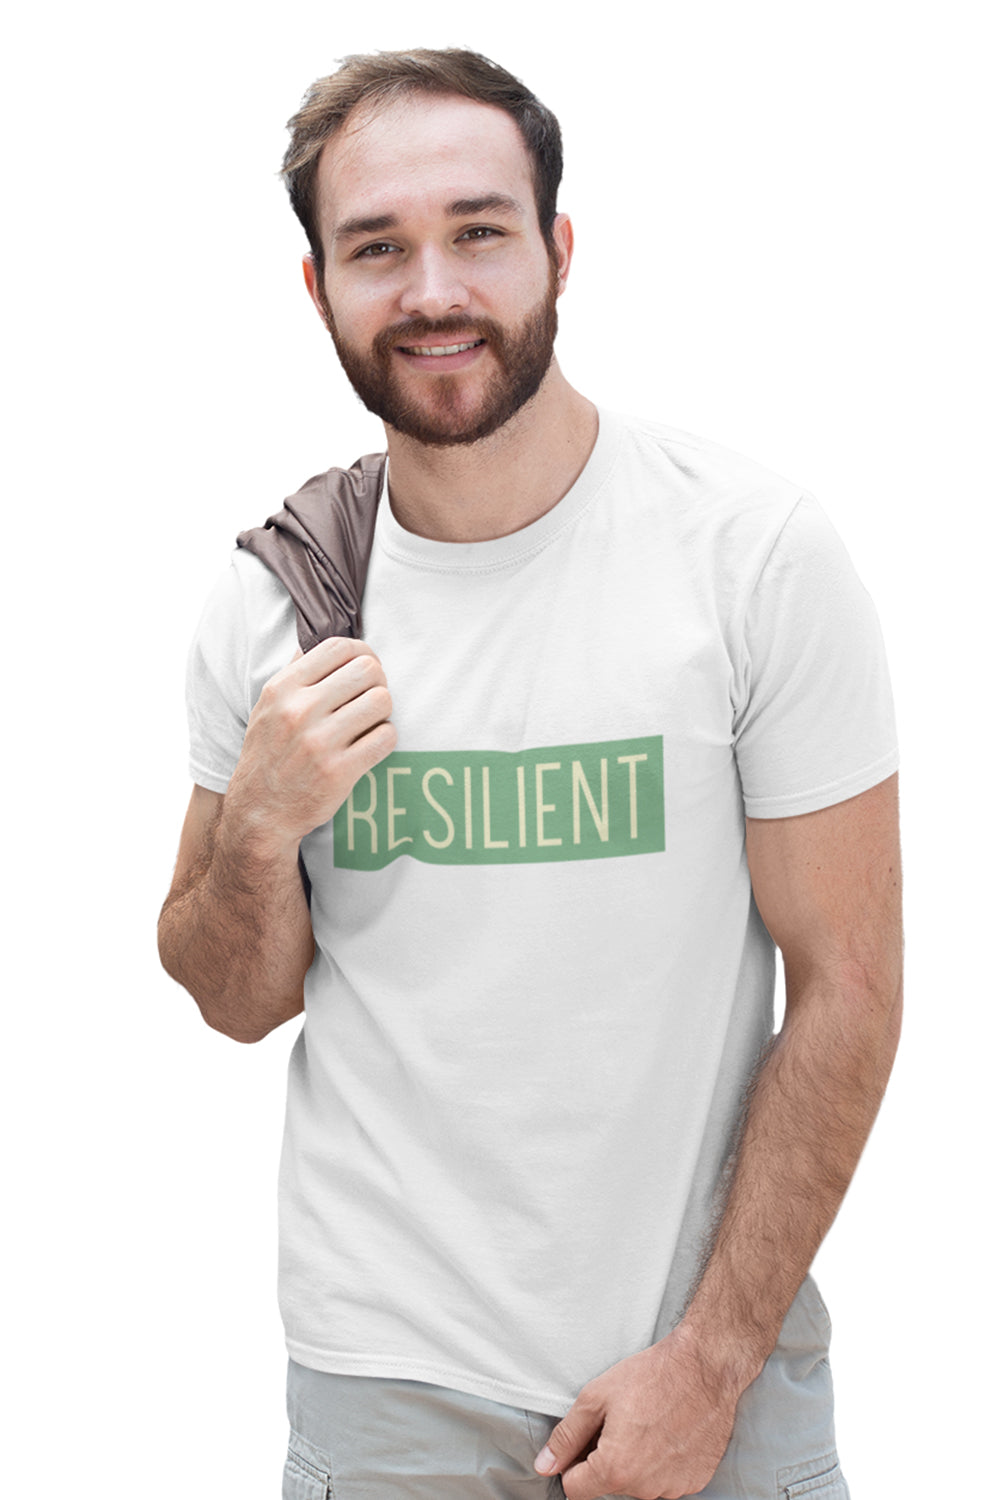 Resilient Graphic Printed White Tshirt